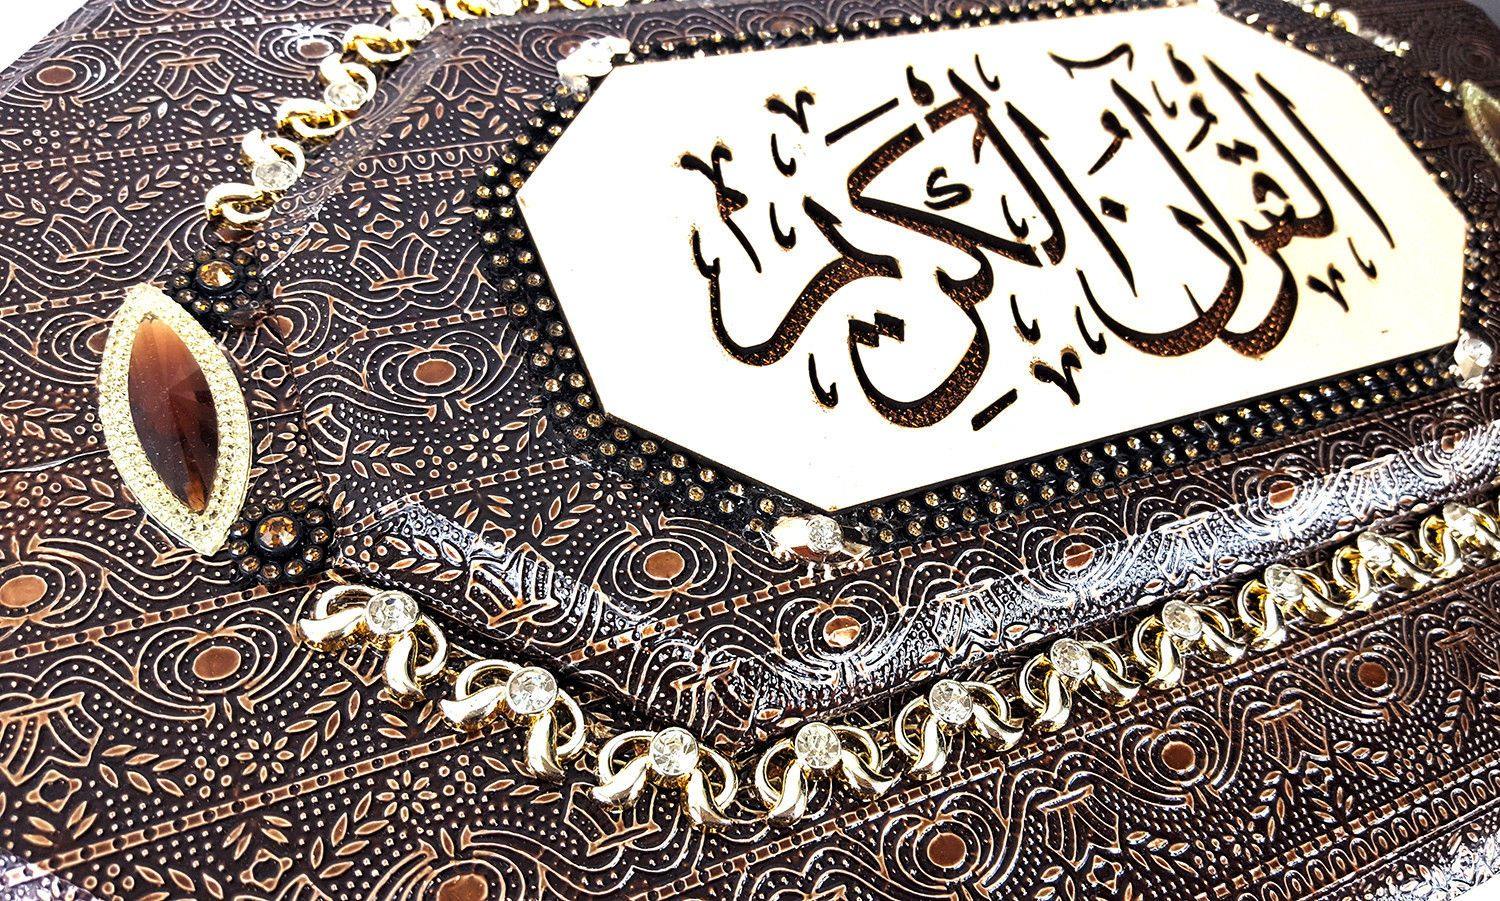 Holy Quran Muslim Home XXL Decorated BOX 16" # 1083B - Arabian Shopping Zone